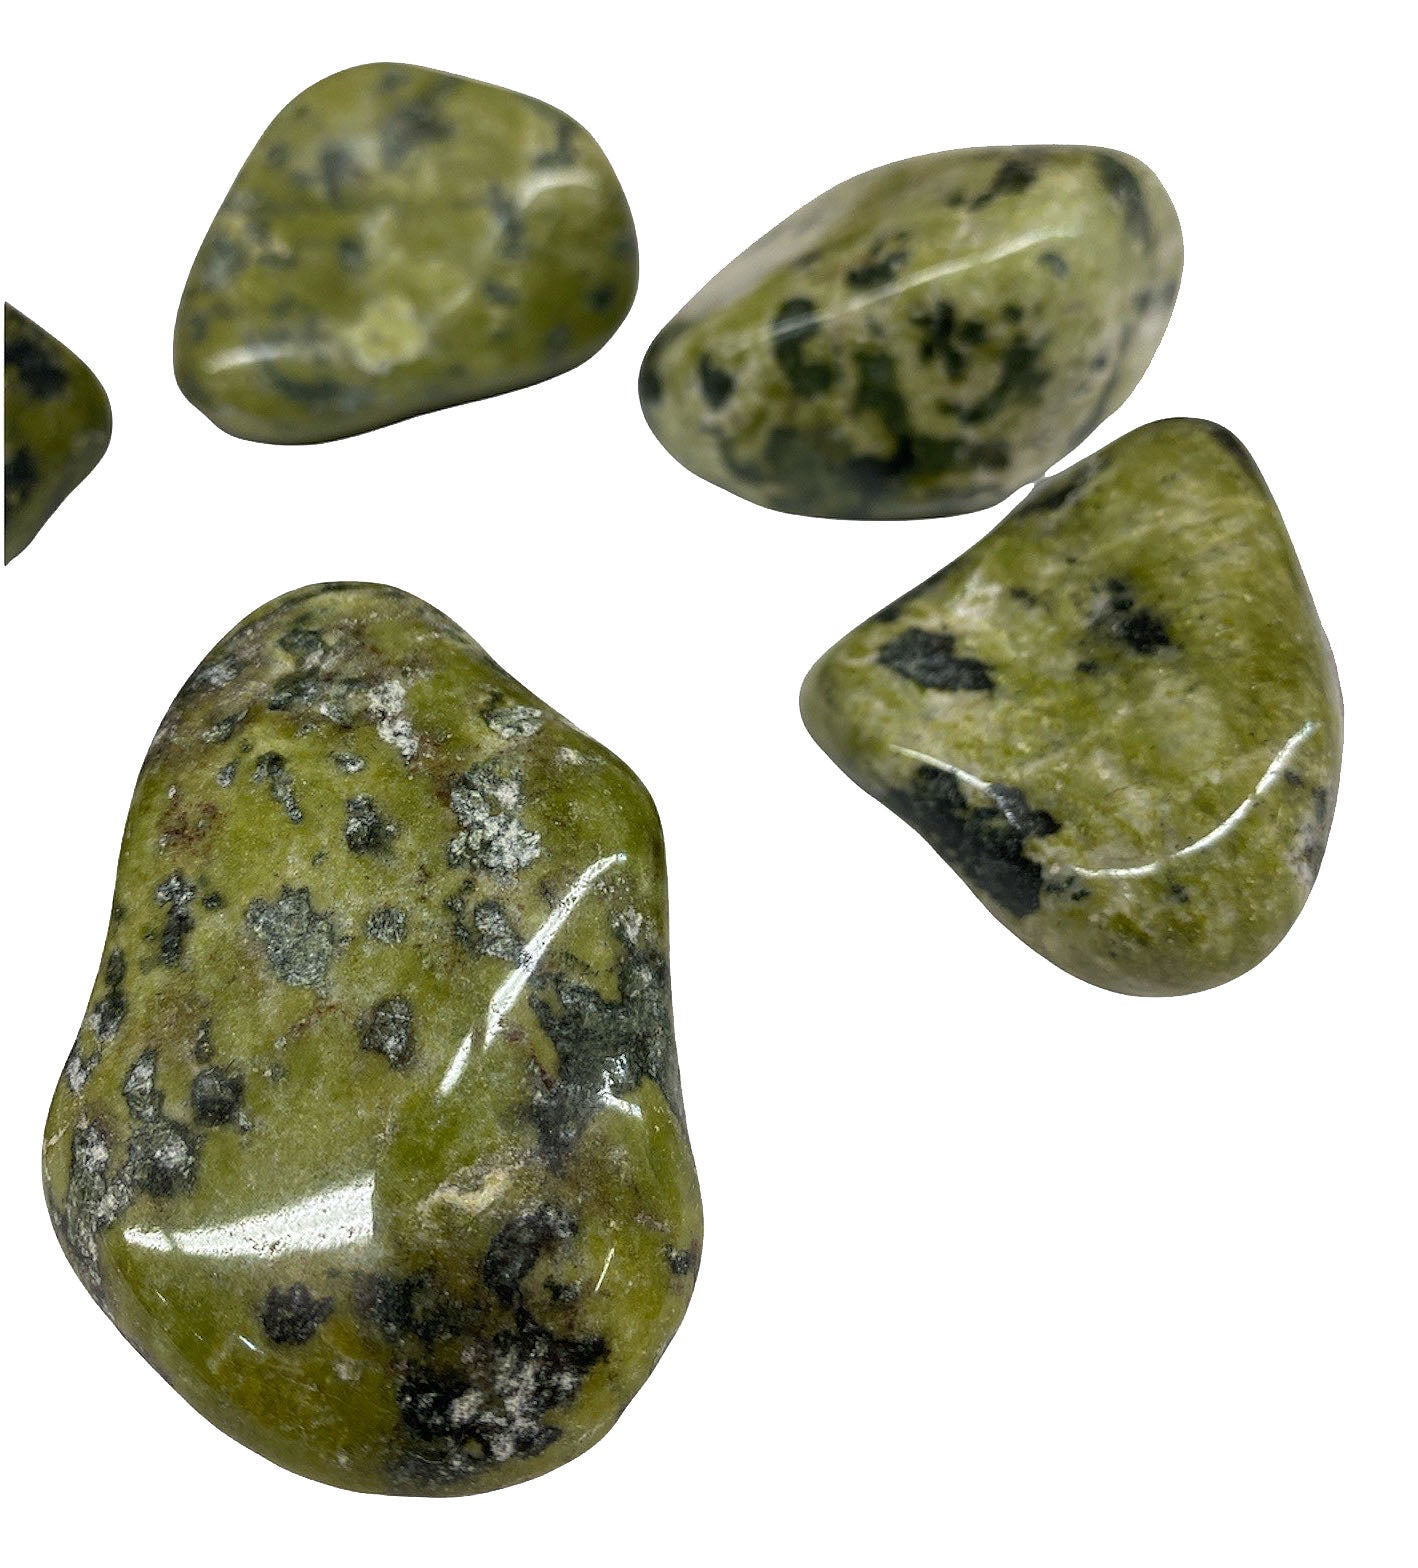 Nephrite Jade Tumble Stones - 40 to 60mm  - Q2A - Brazil - NEW122
1 LB